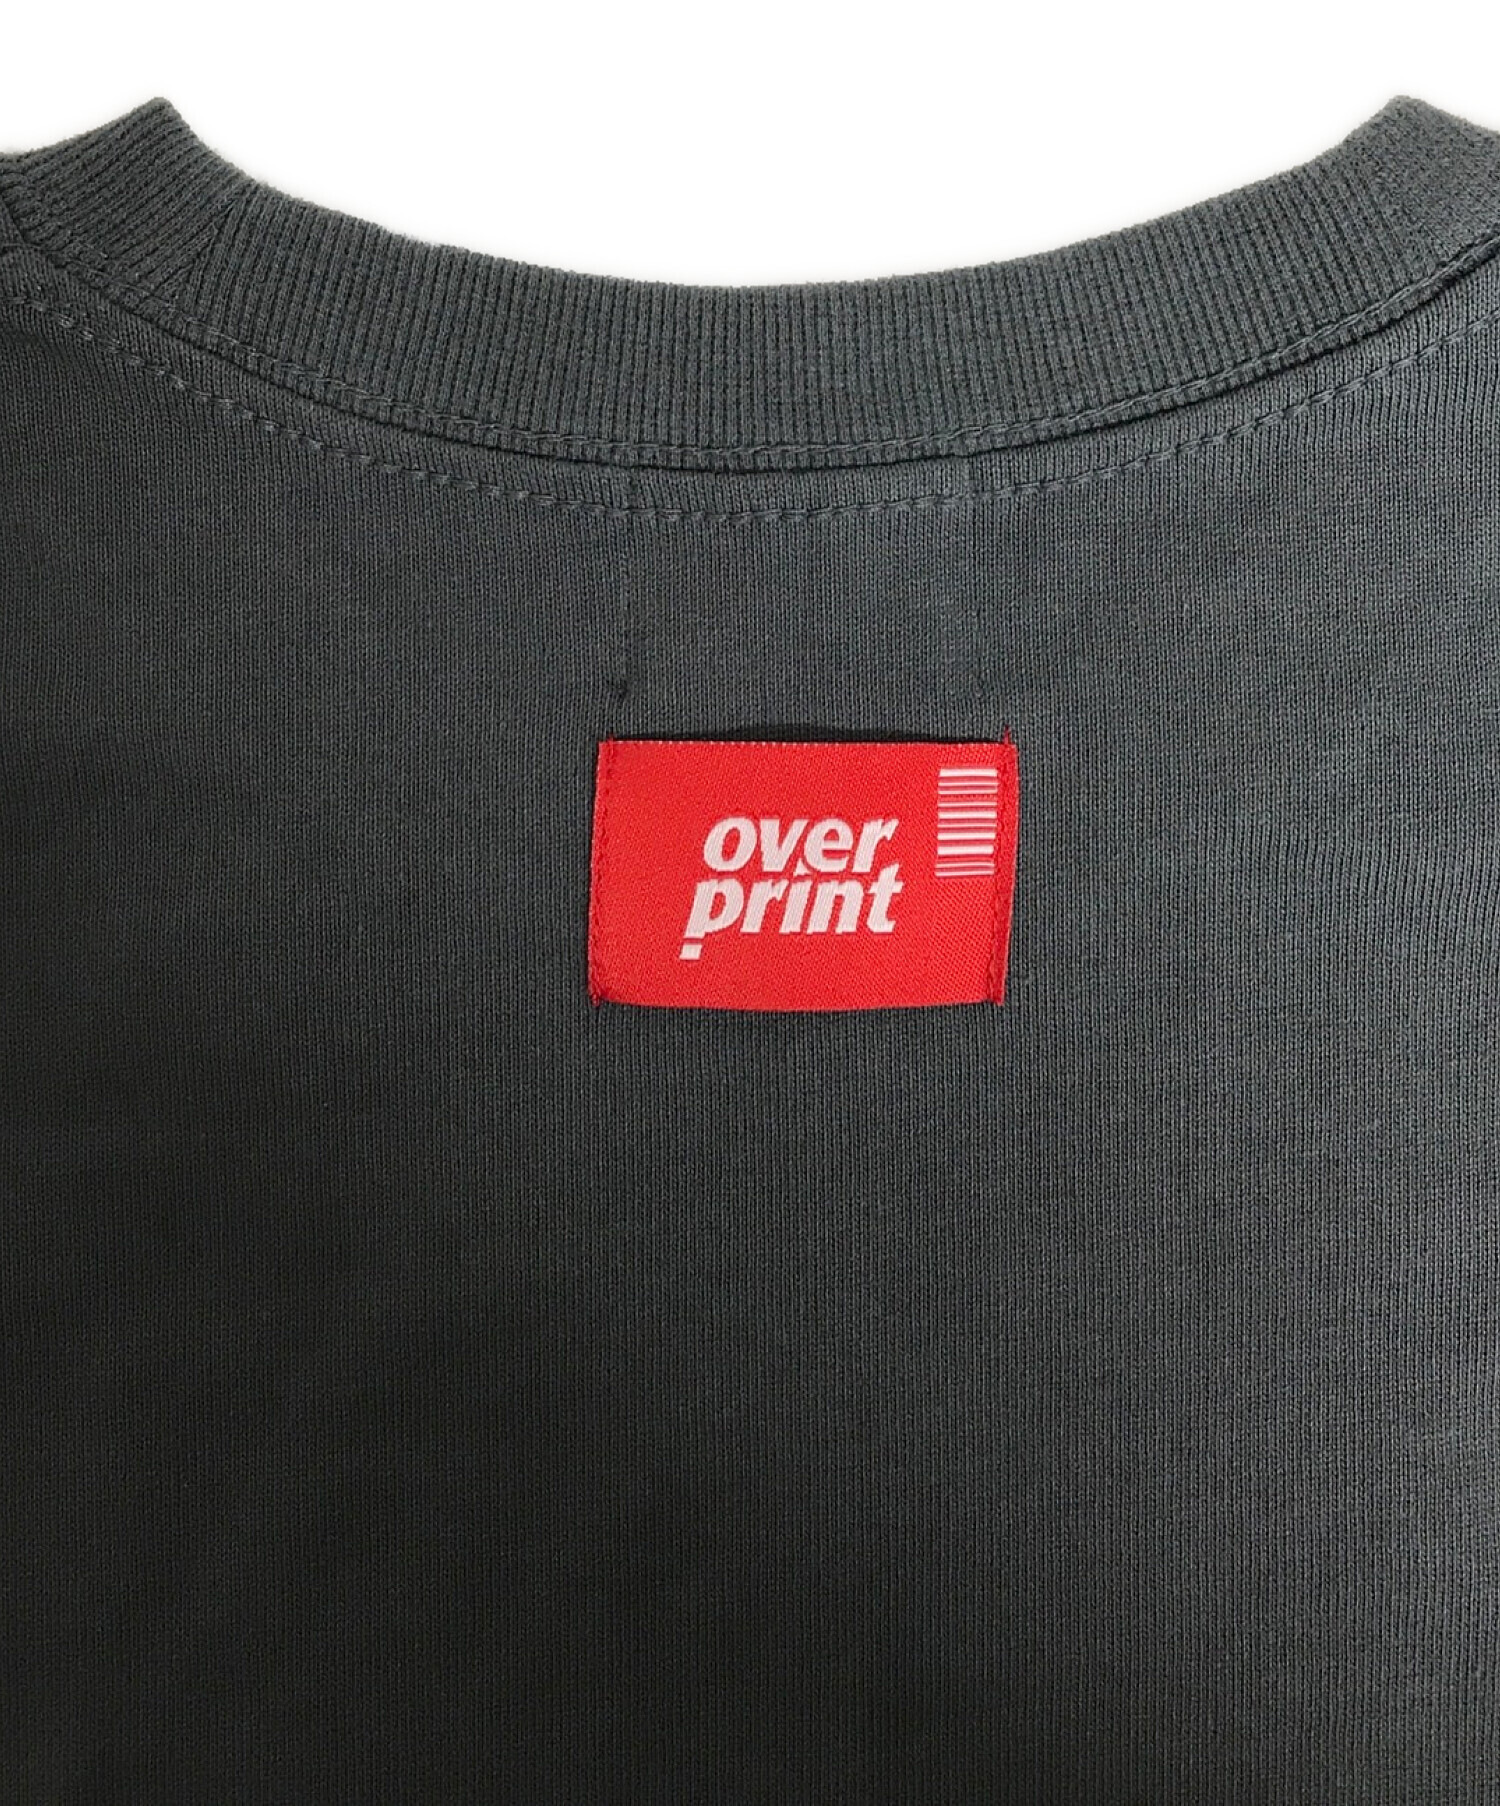 9090×over print (9090×オーバープリント) プリントTシャツ チャコールグレー サイズ:M